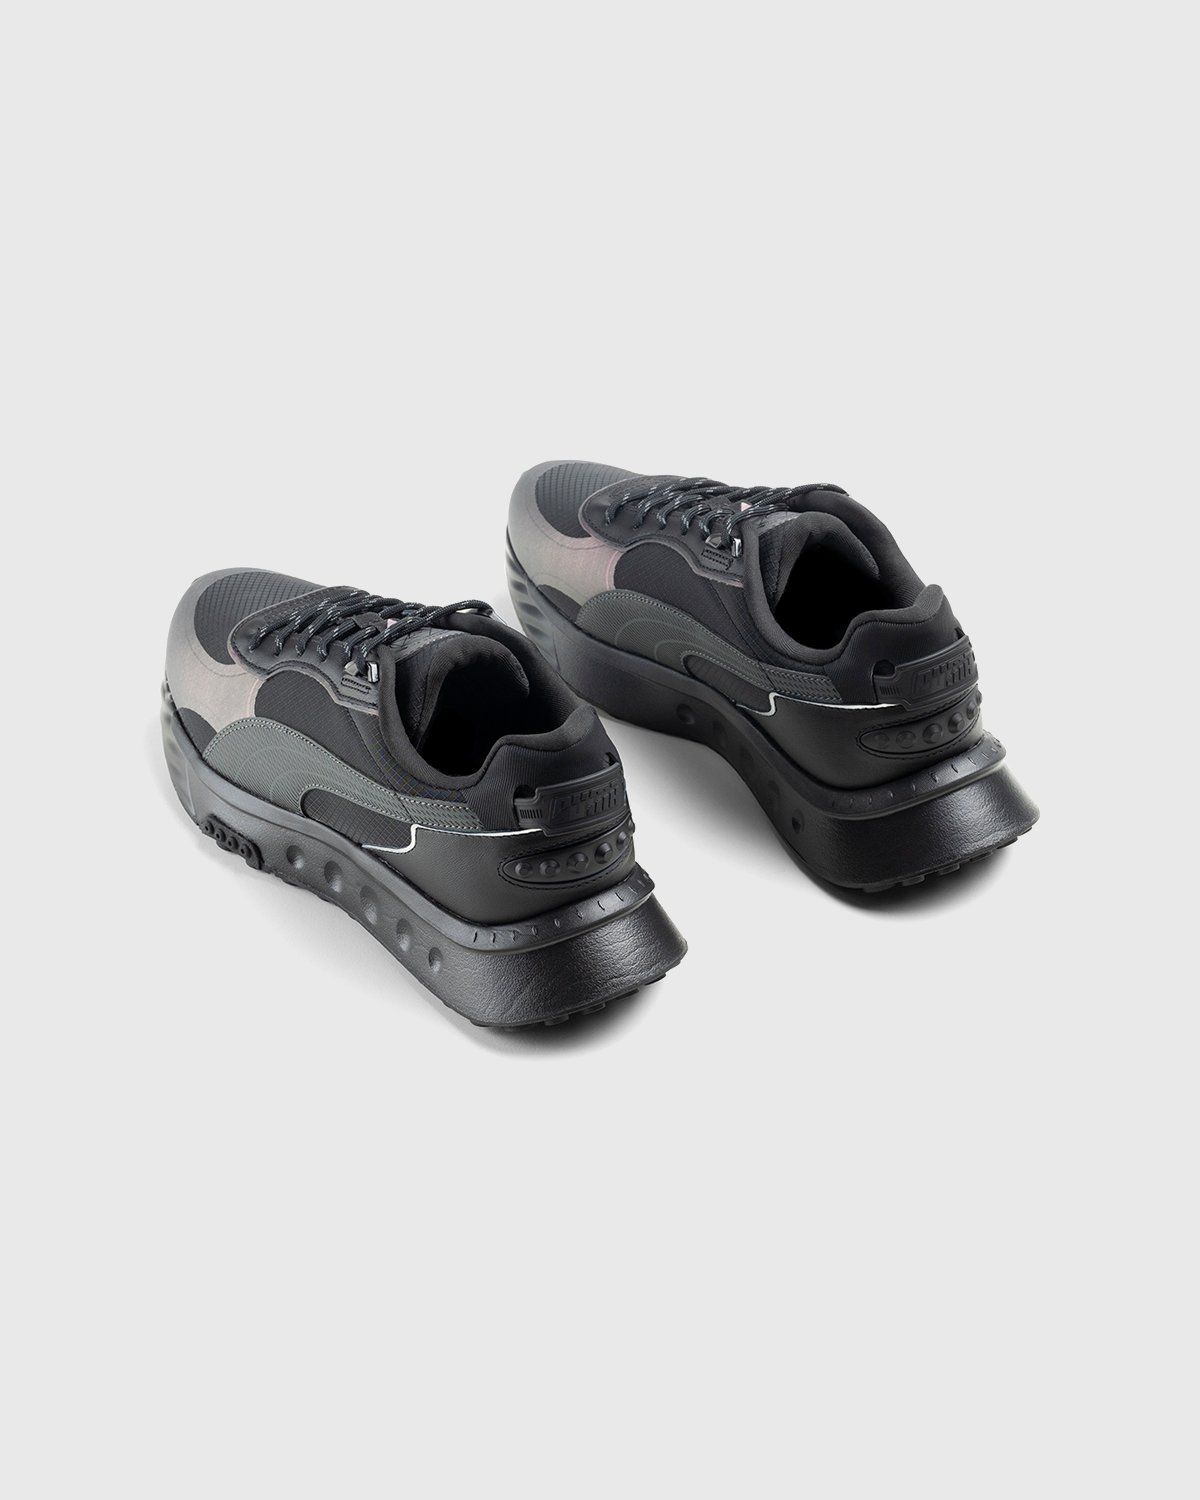 Puma – Wild Rider Grip LS Black - Low Top Sneakers - Black - Image 4